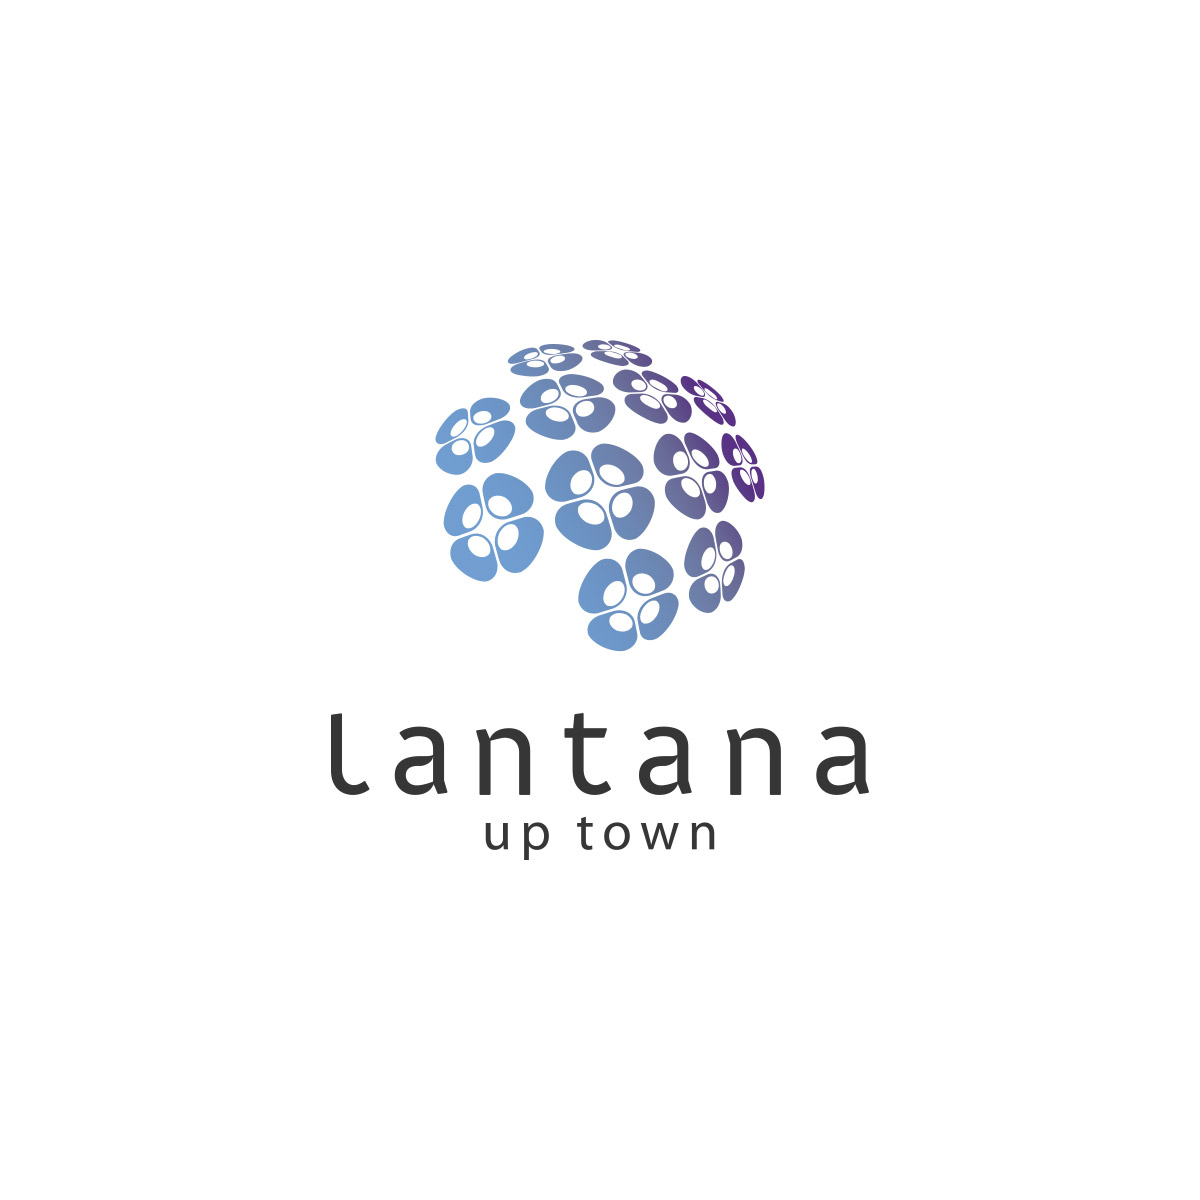 Logotipo Lantana